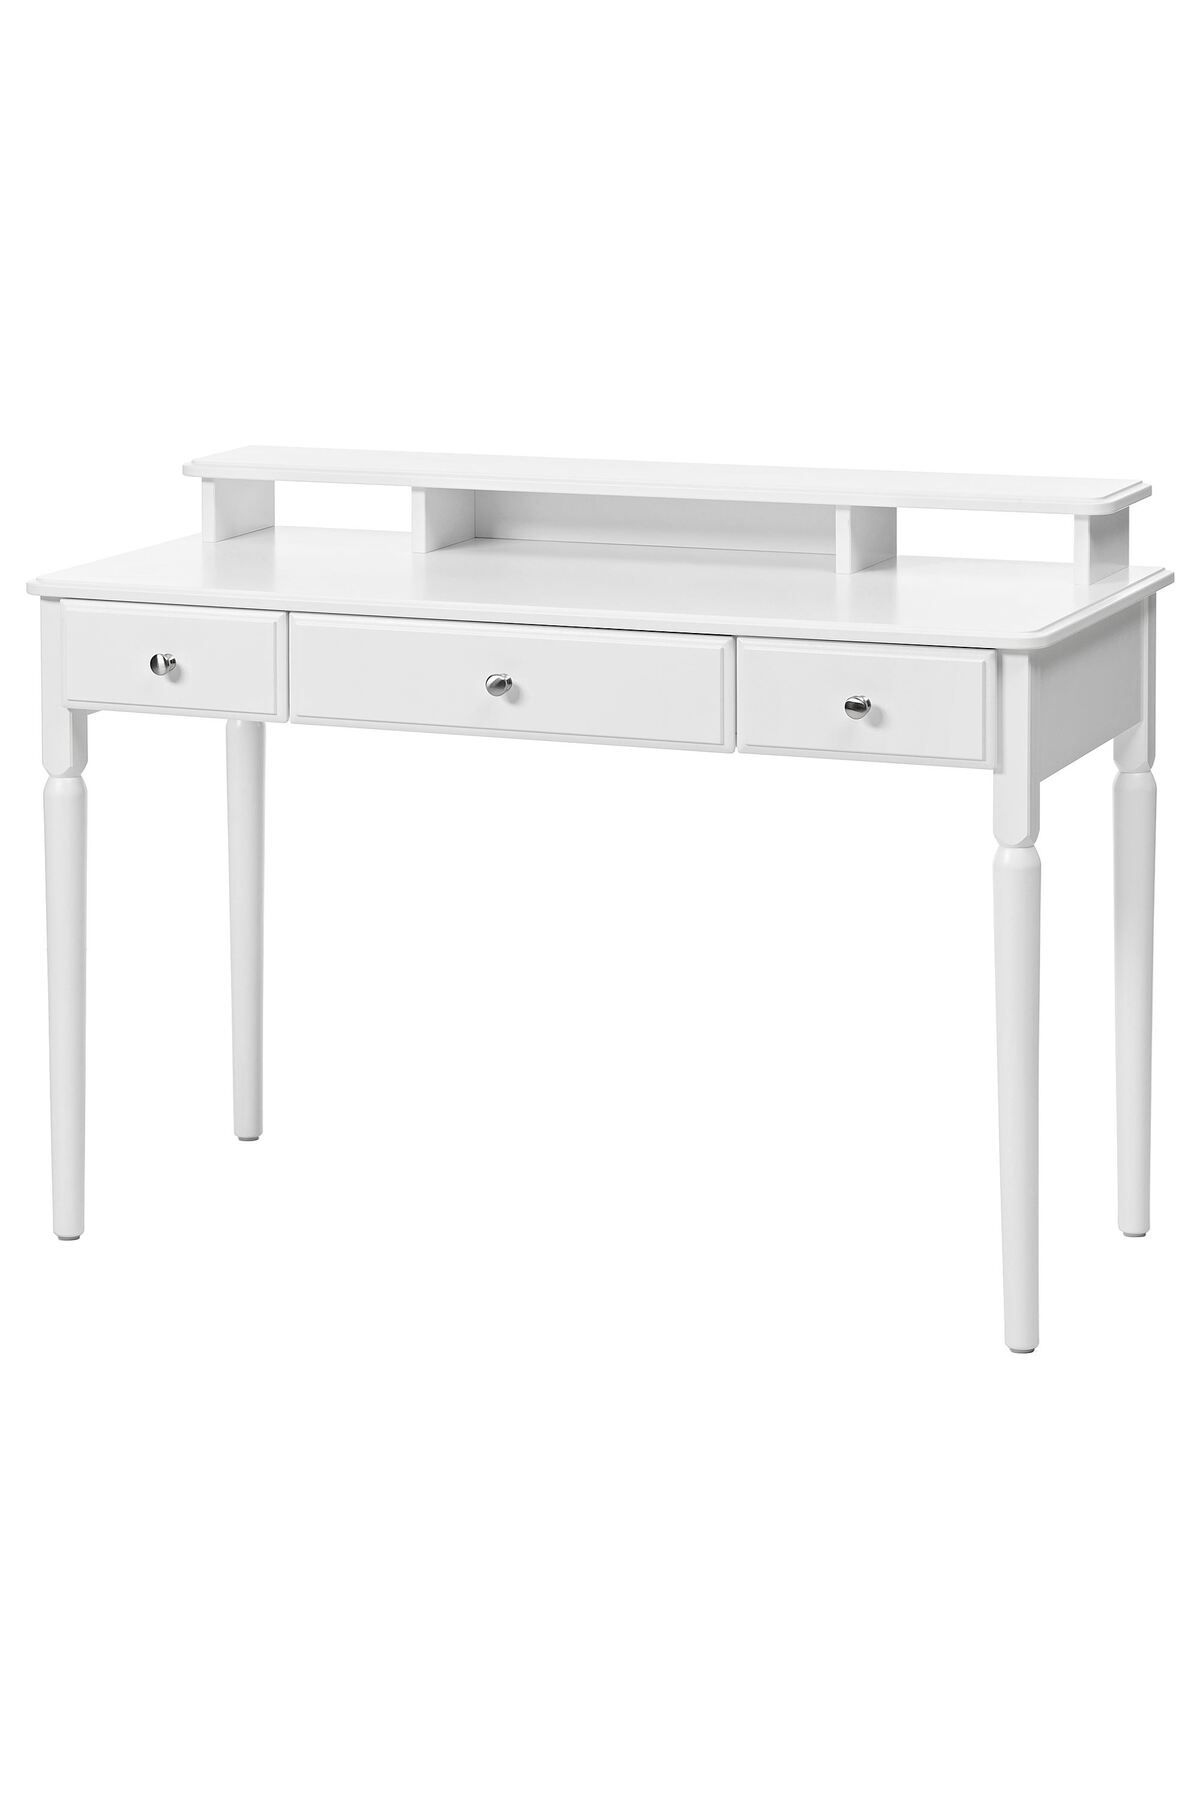 IKEA TYSSEDAL makyaj masası, beyaz, 120x51 cm